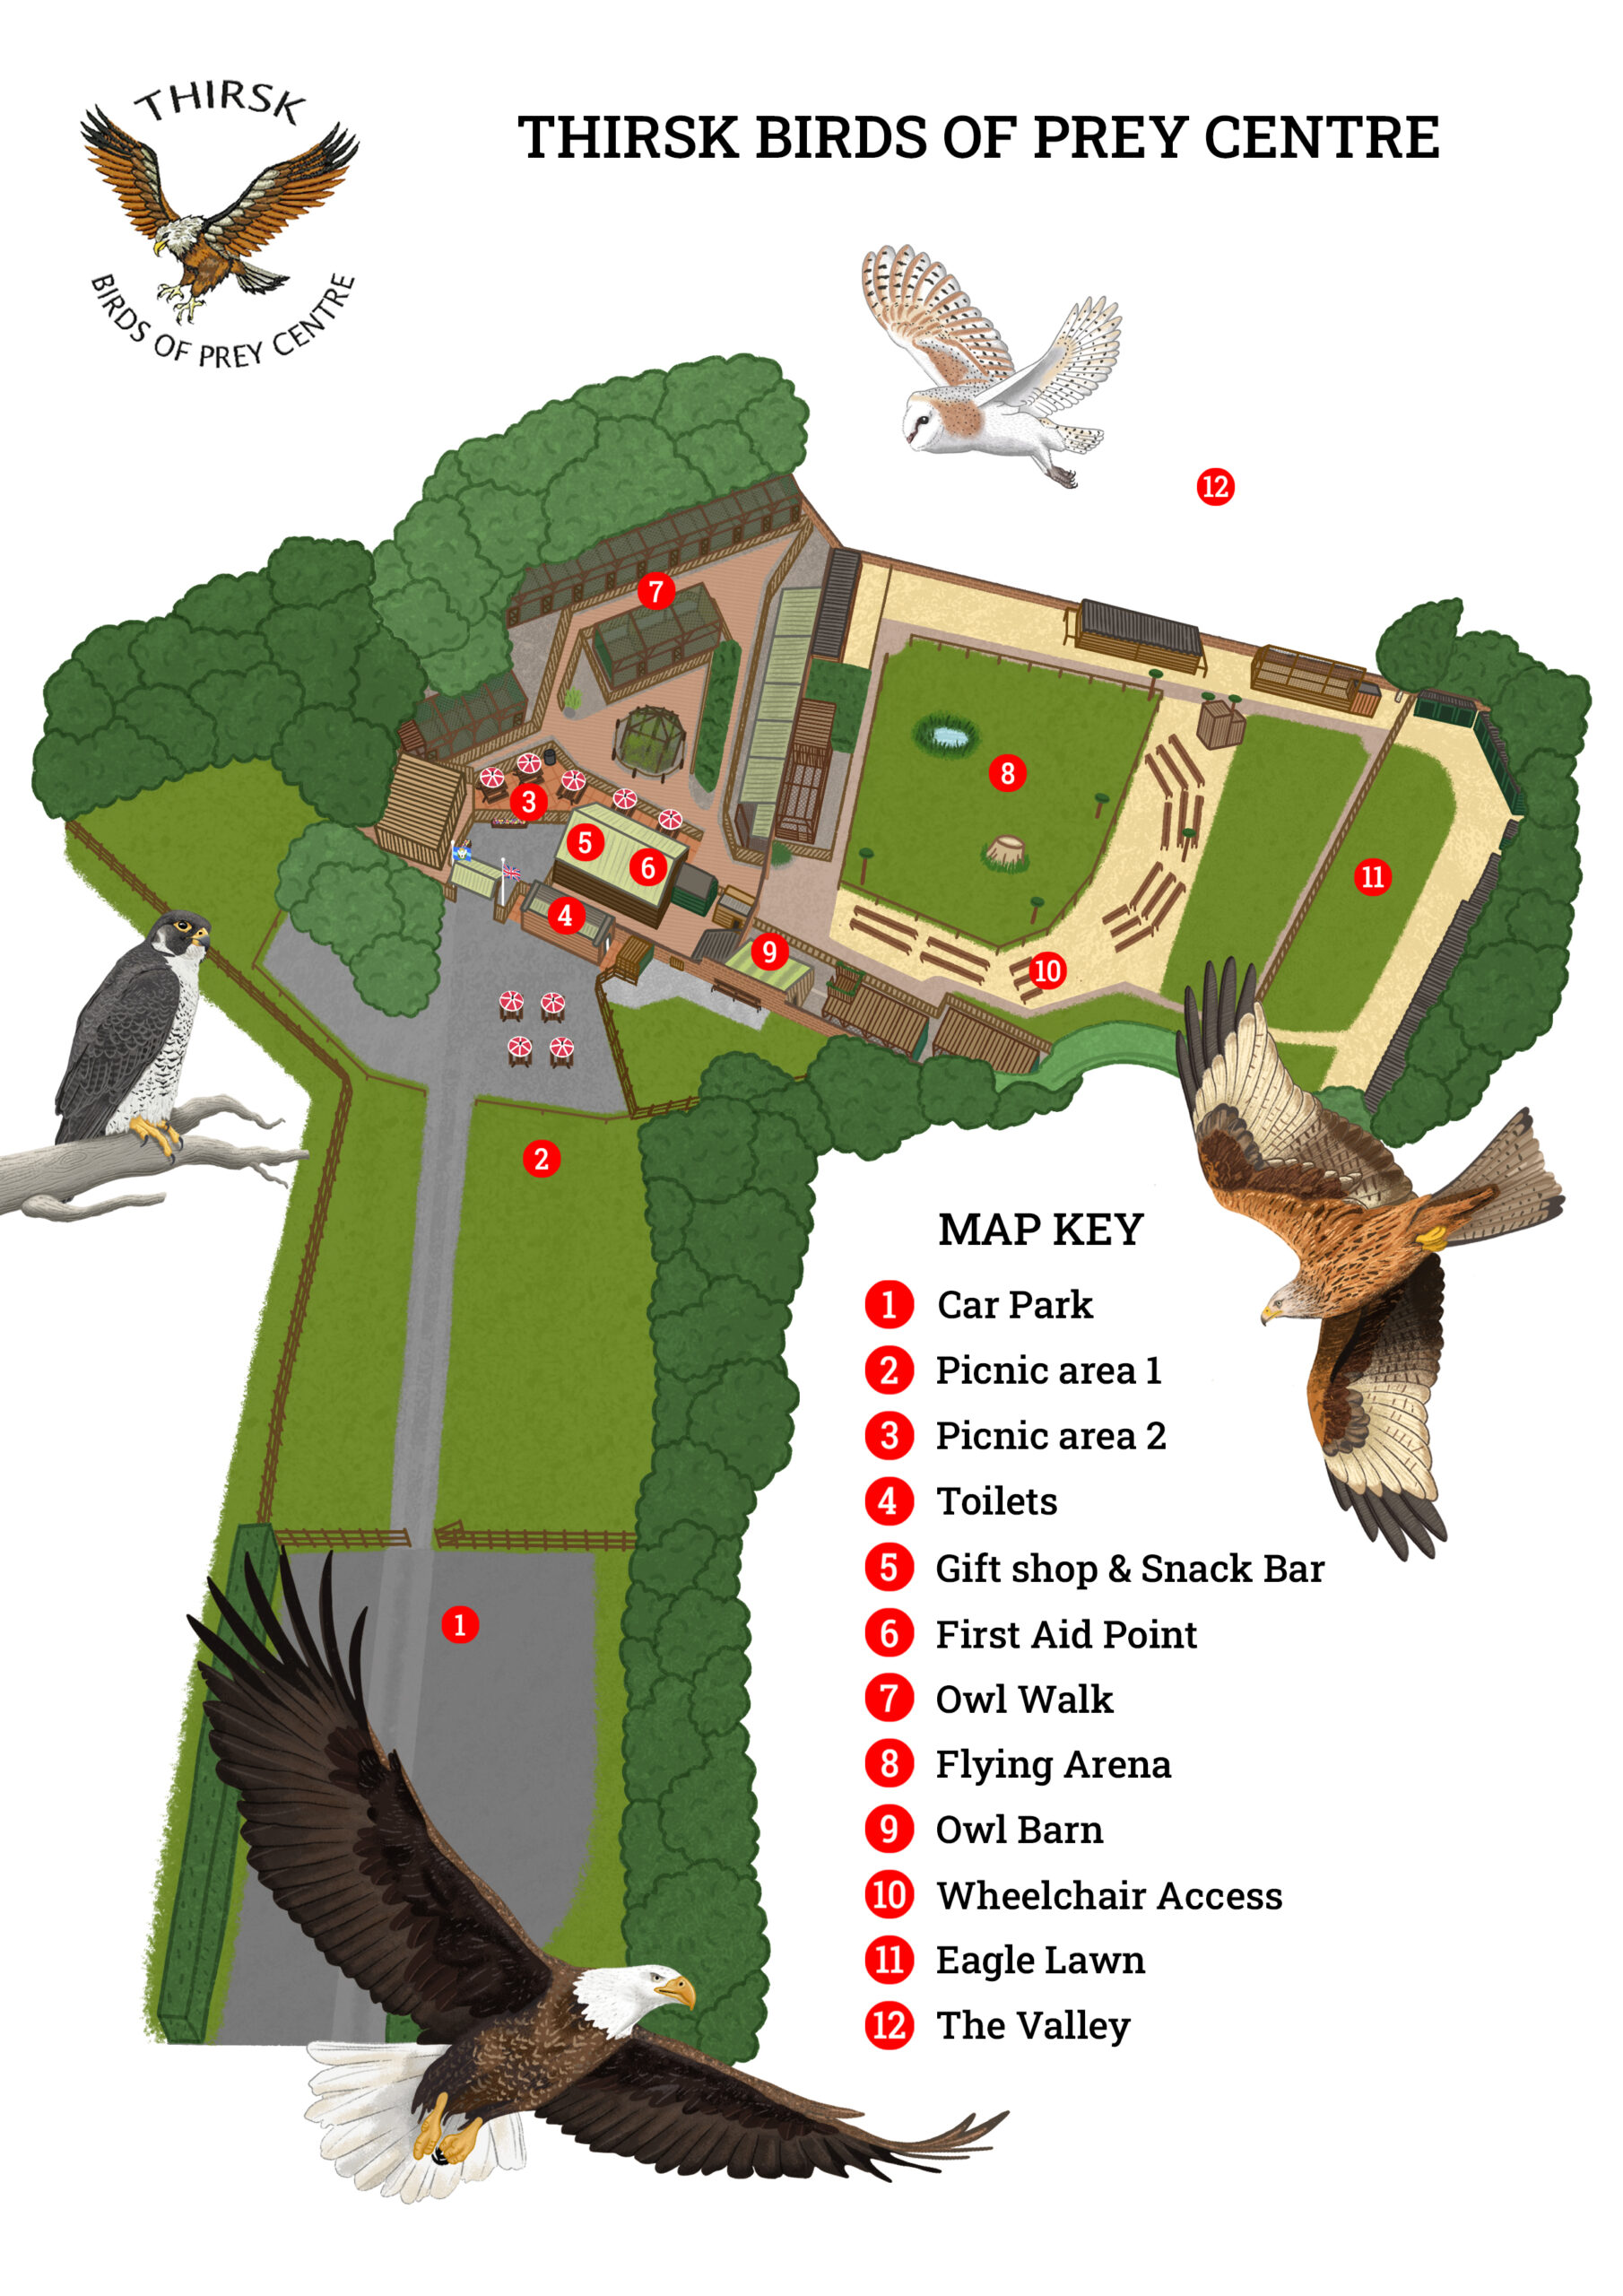 Visit The British Bird Of Prey Centre